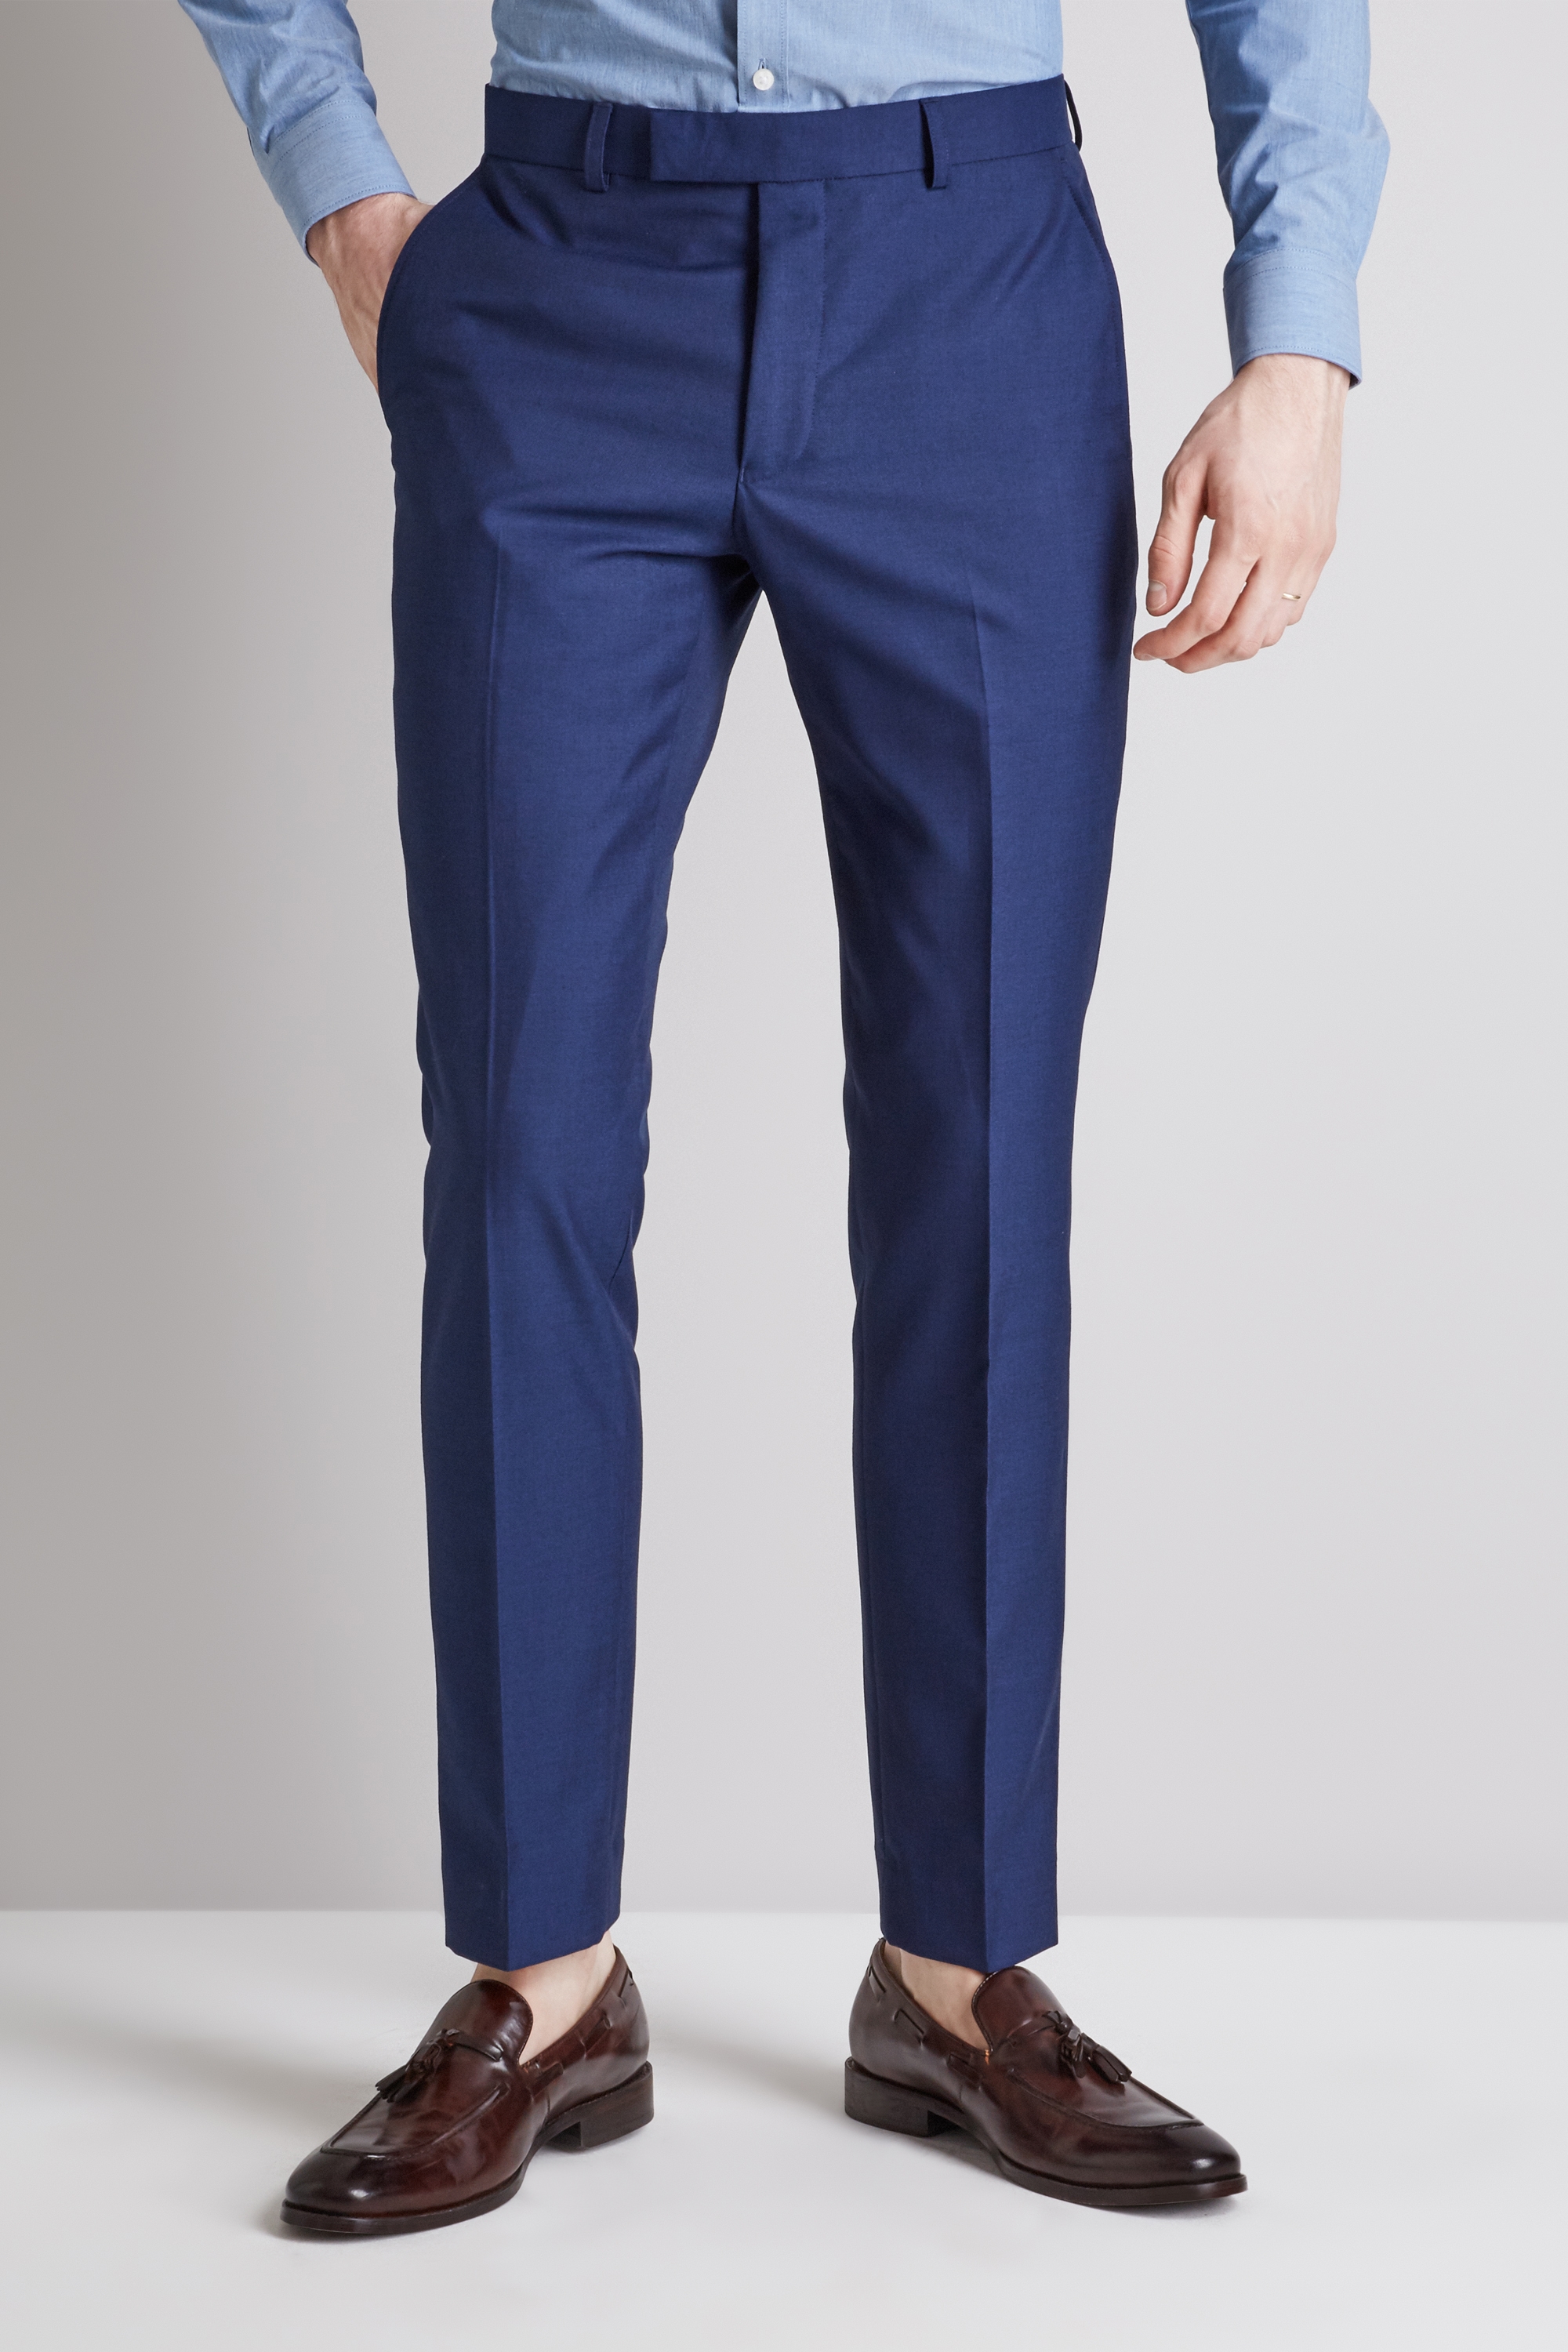 Moss London Skinny/Slim Fit Blue Trousers